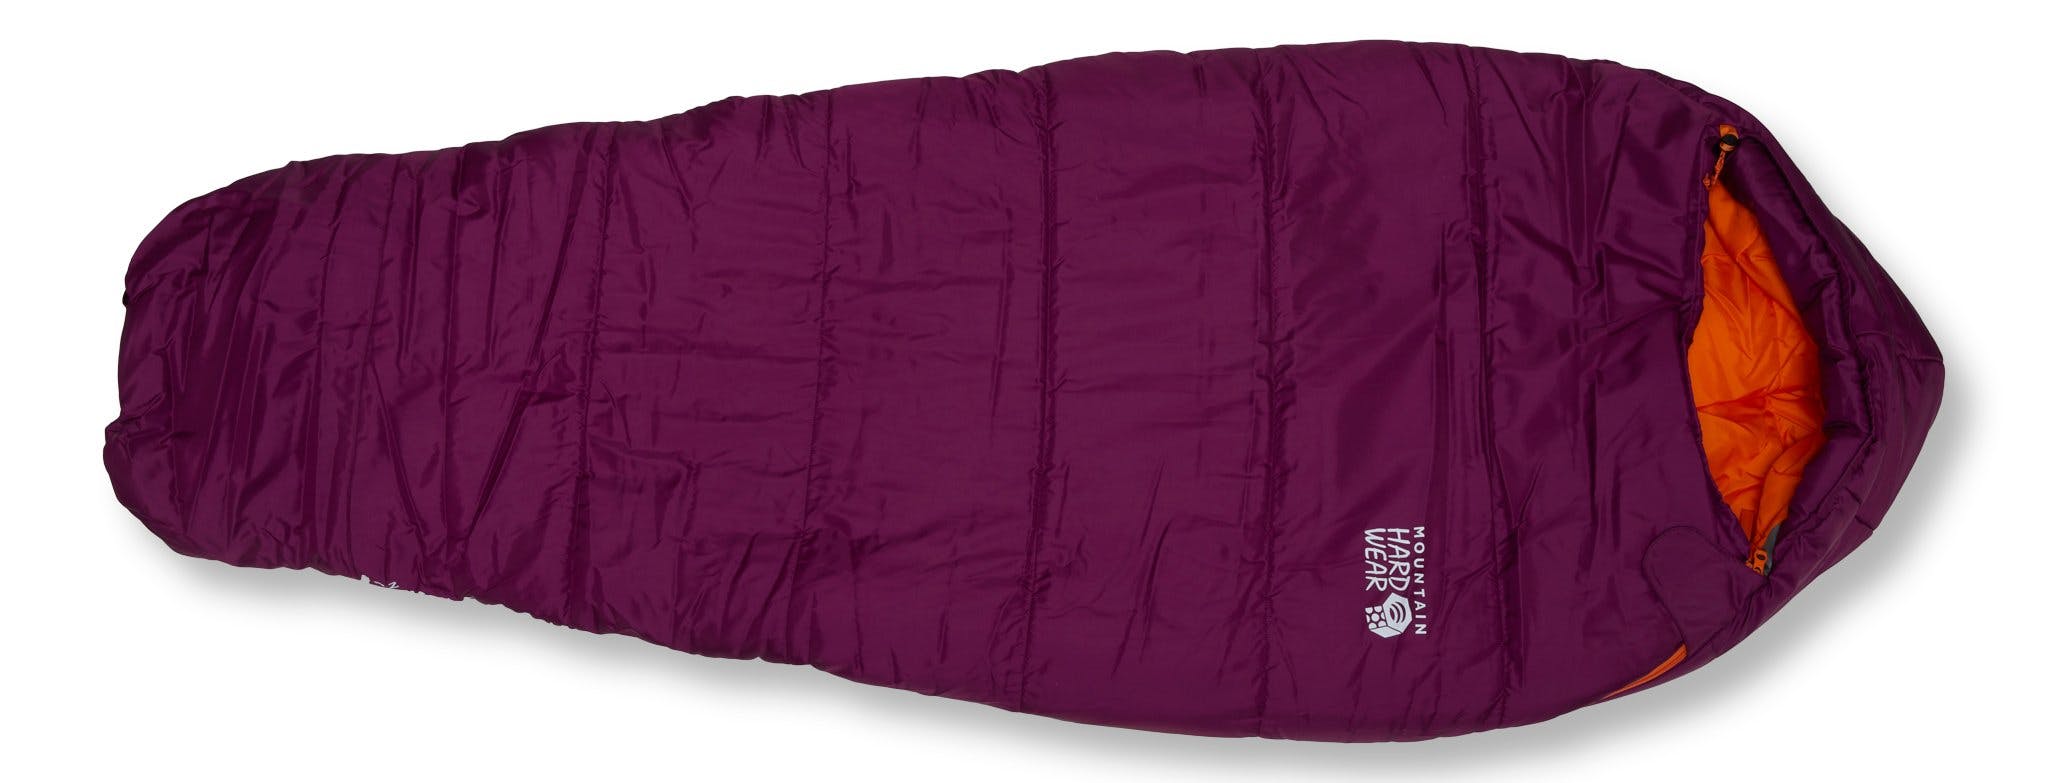 Product image for Bozeman Adjustable Regular Sleeping Bag - Youth